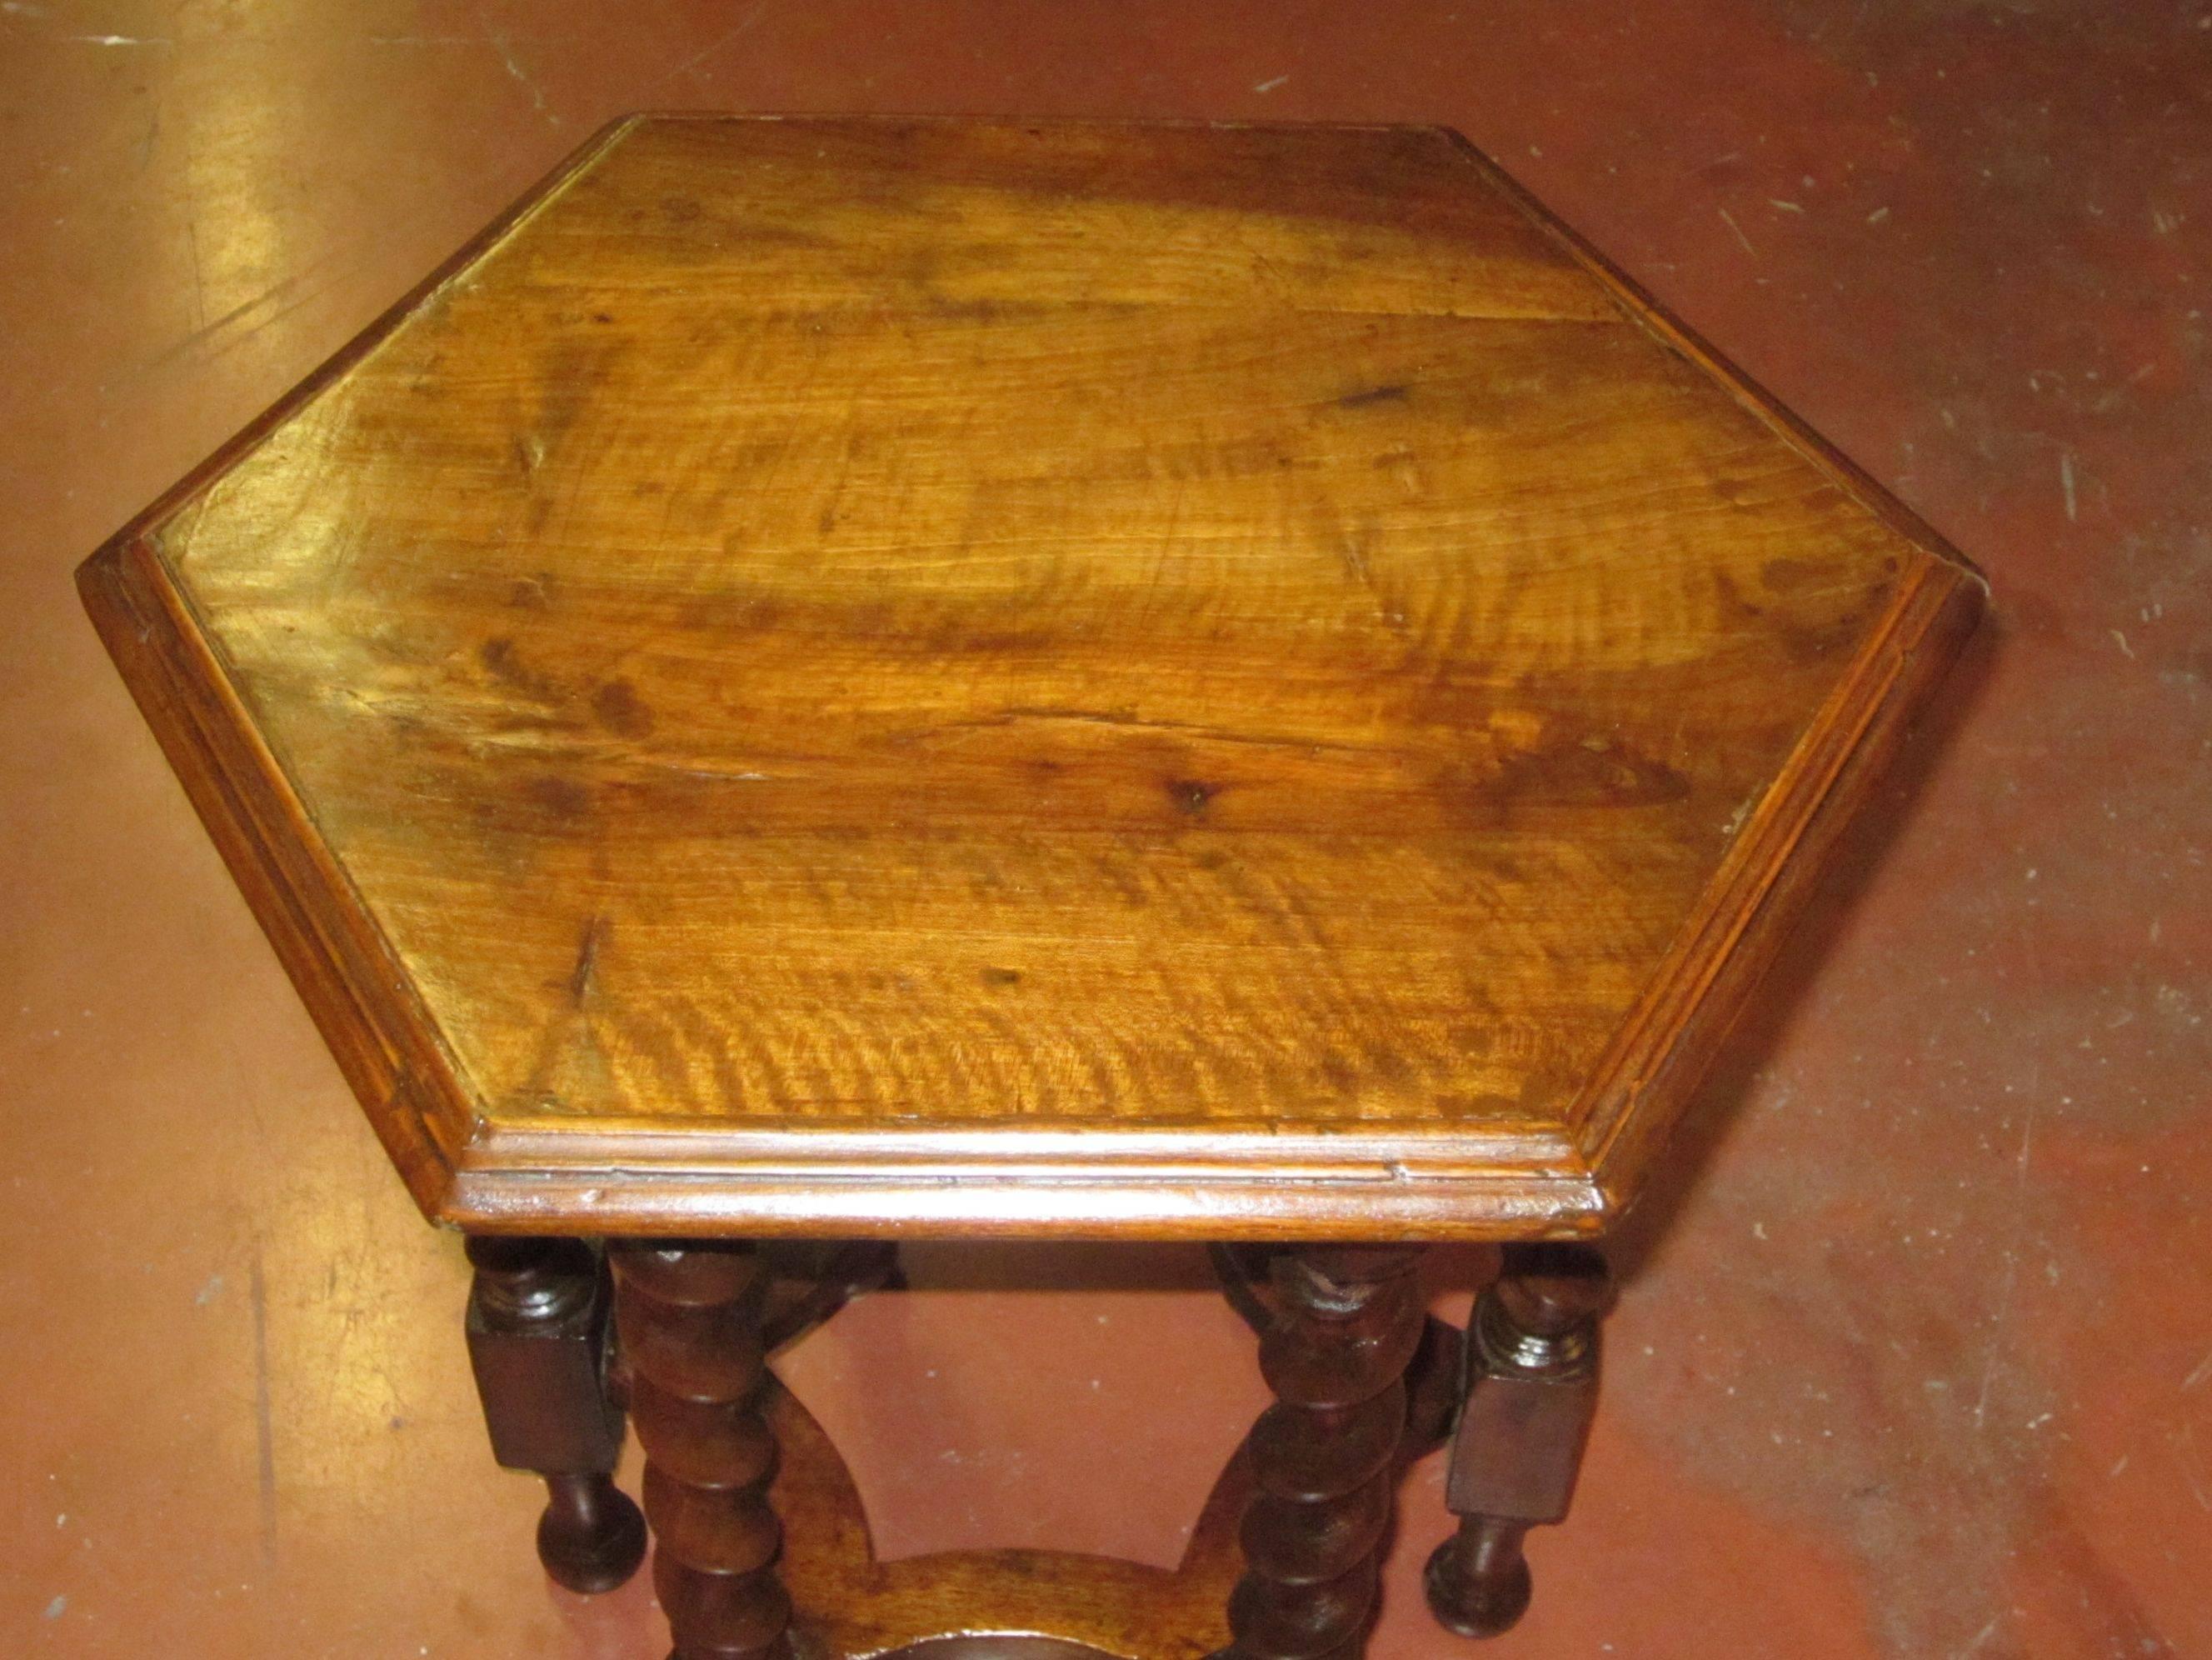 1930's Italian walnut hexagonal barley-twist leg side table.
Excellent condition.